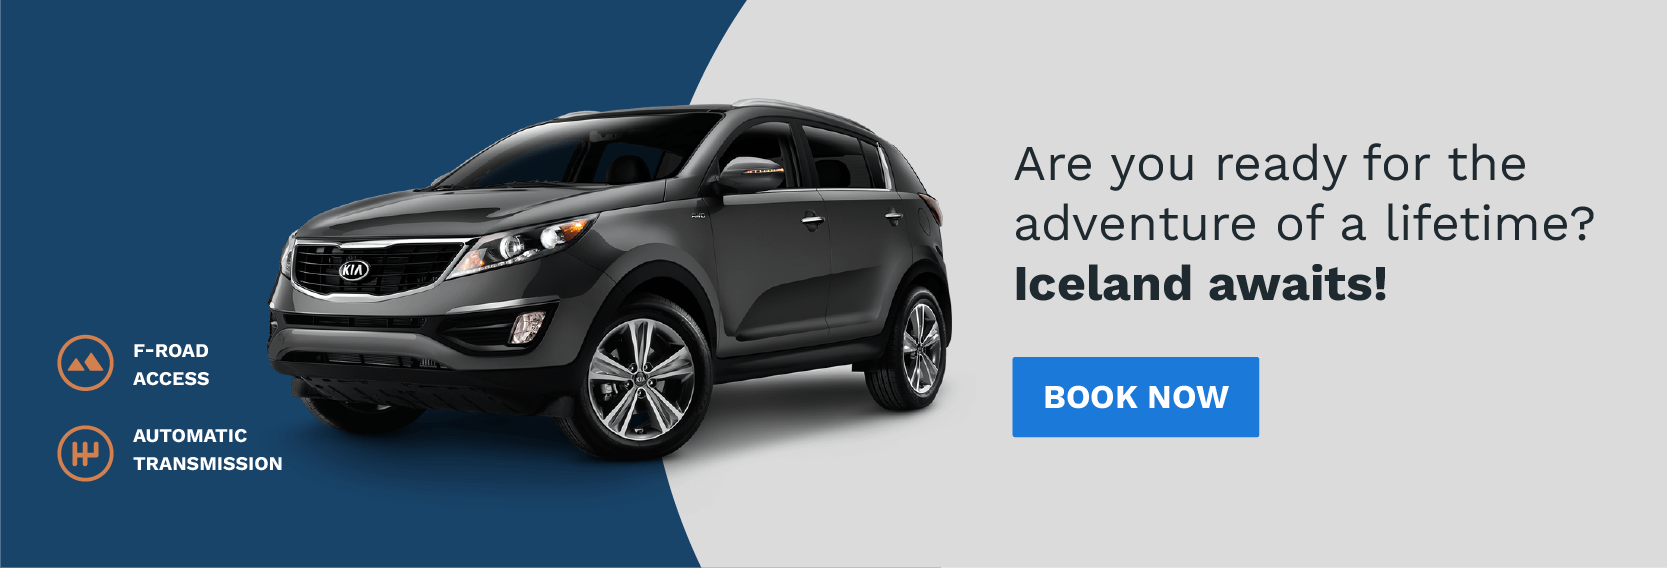 car rental Iceland